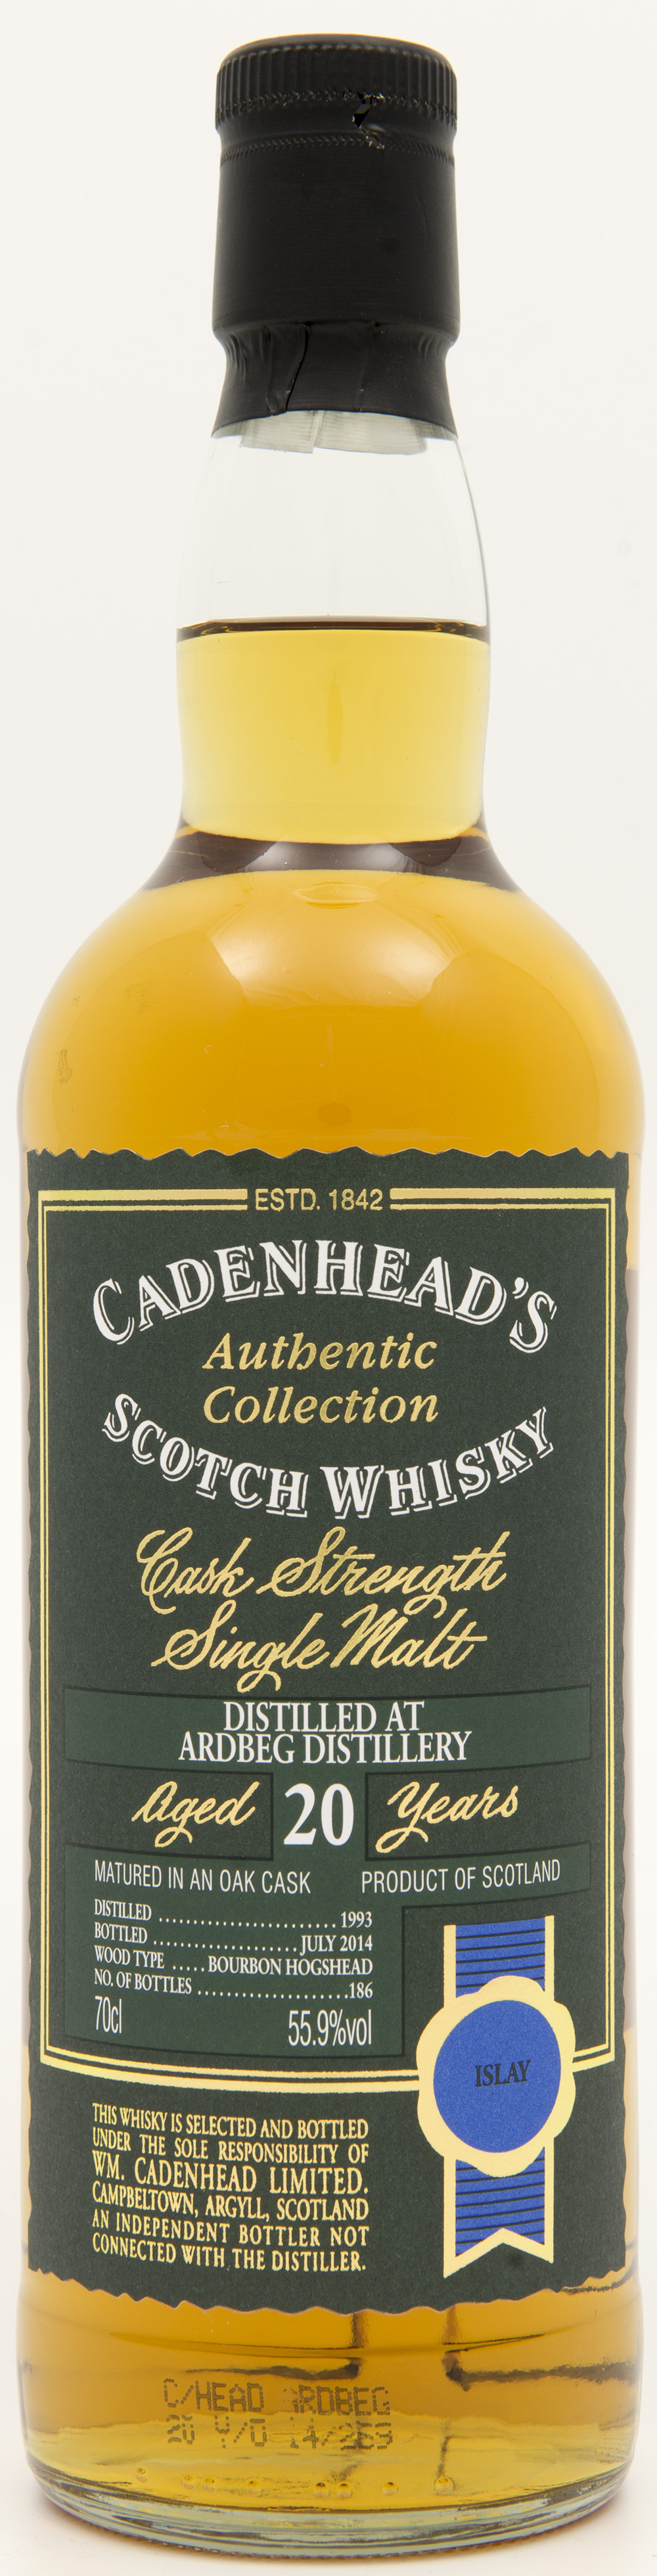 Billede: DSC_4831 - Cadenheads Authentic Collection - Ardbeg 20 years - bottle front.jpg